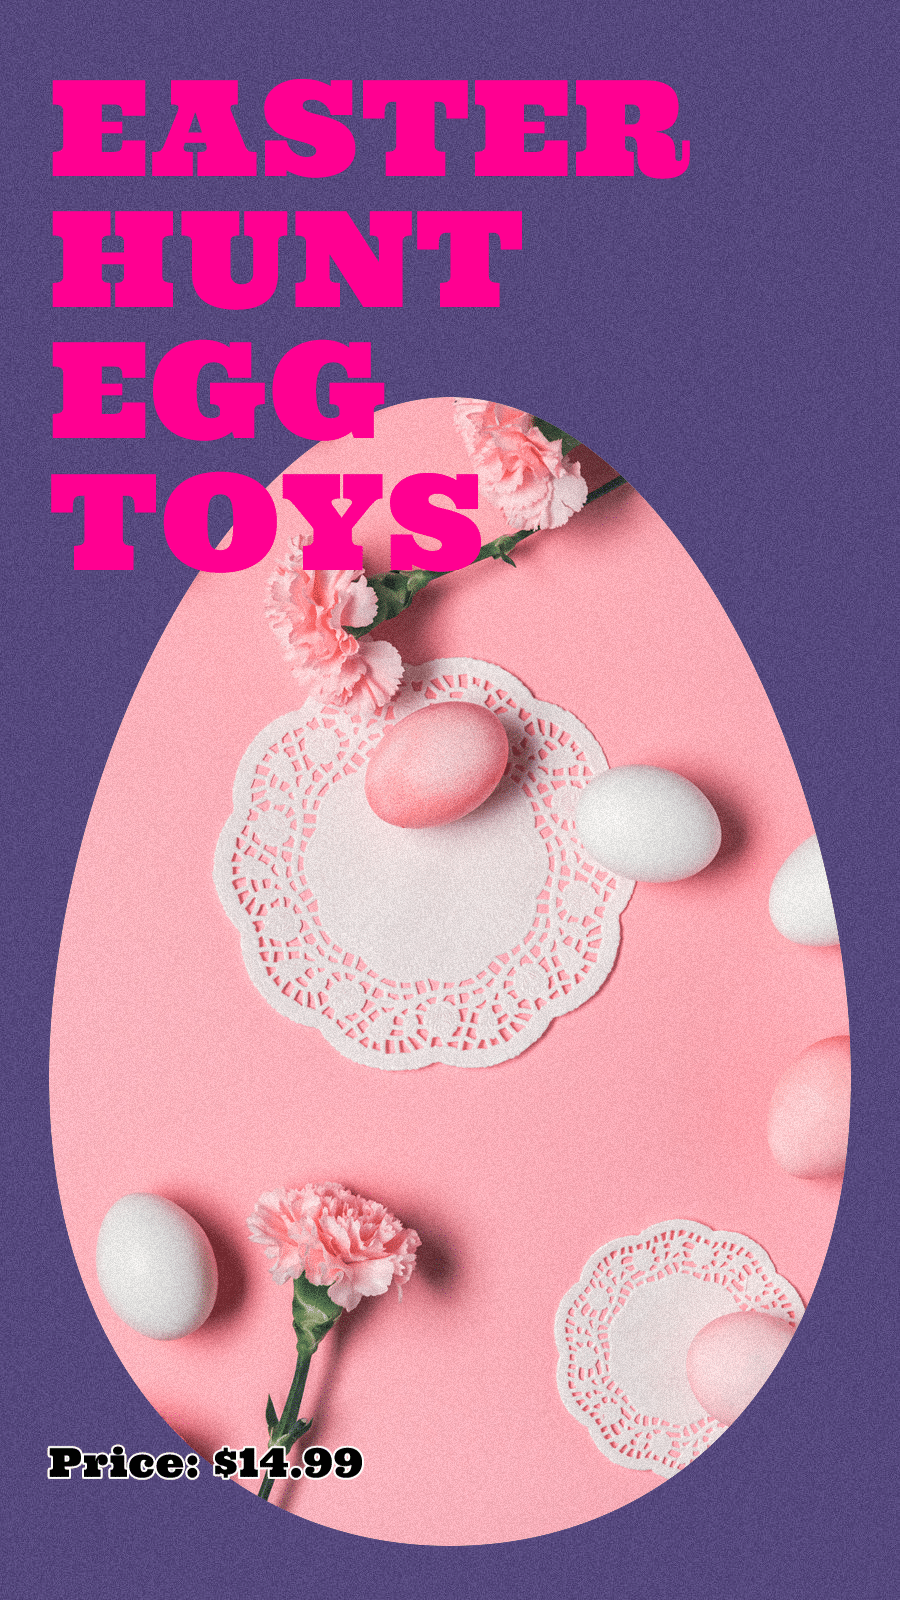 Simple Eaaster Hunt Egg Toys Dipslay Instagram Story